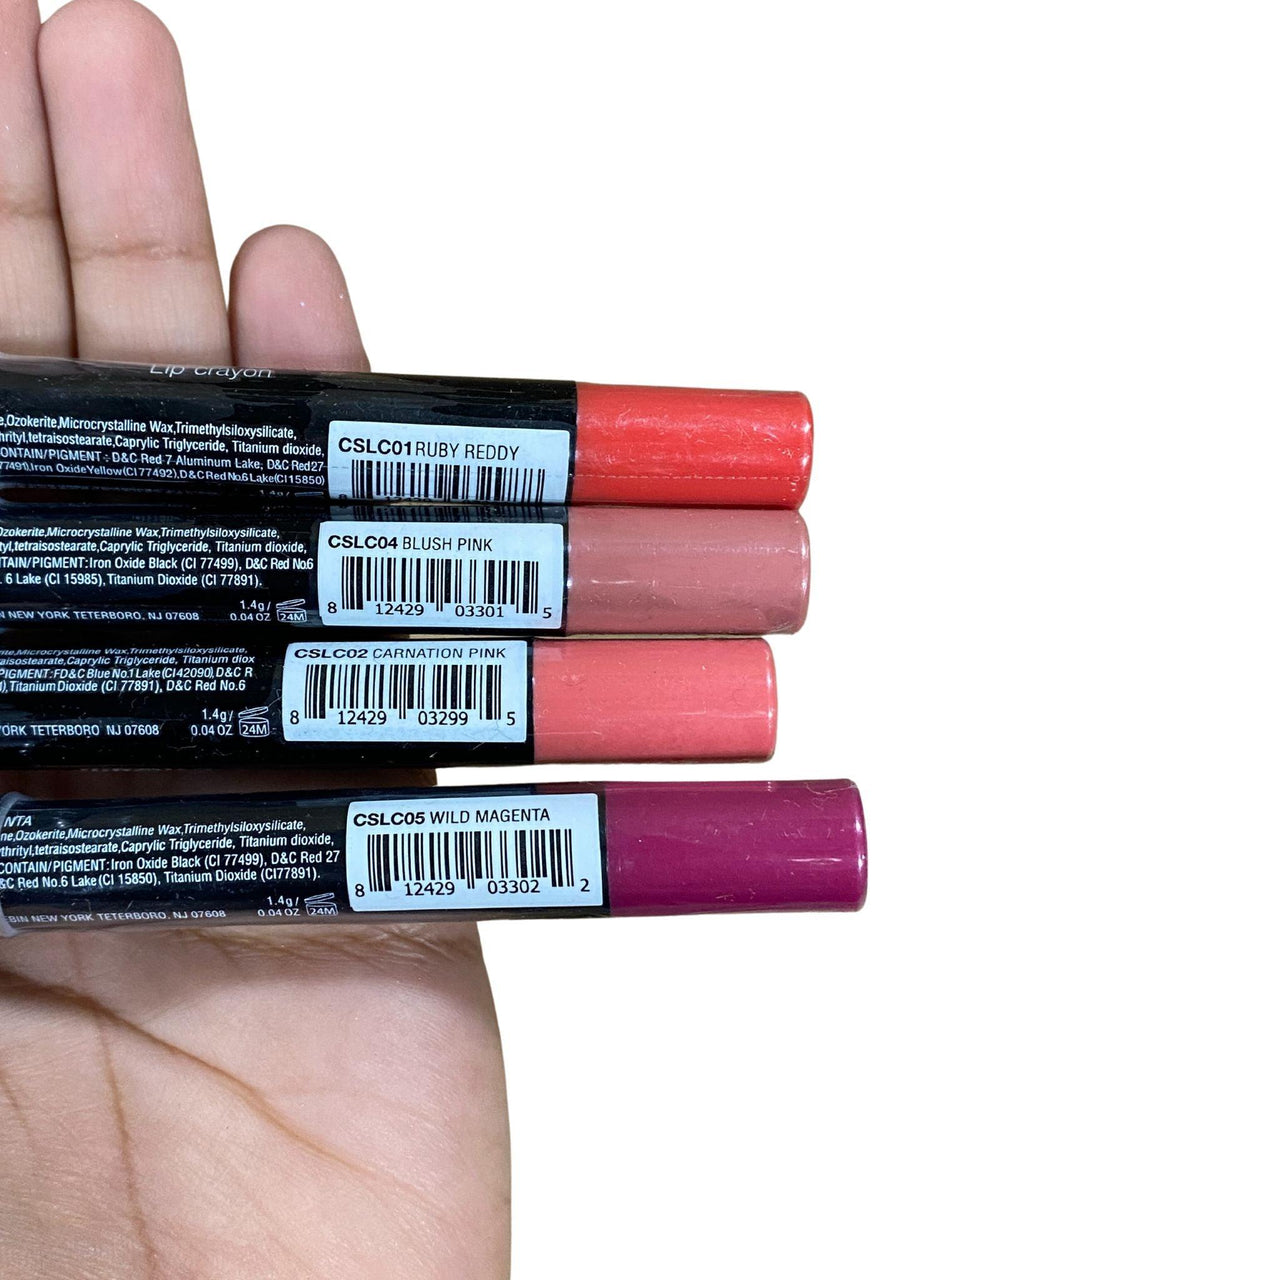 Ebin New York Snuggie Lip Crayon (50 Pcs Box) - Discount Wholesalers Inc